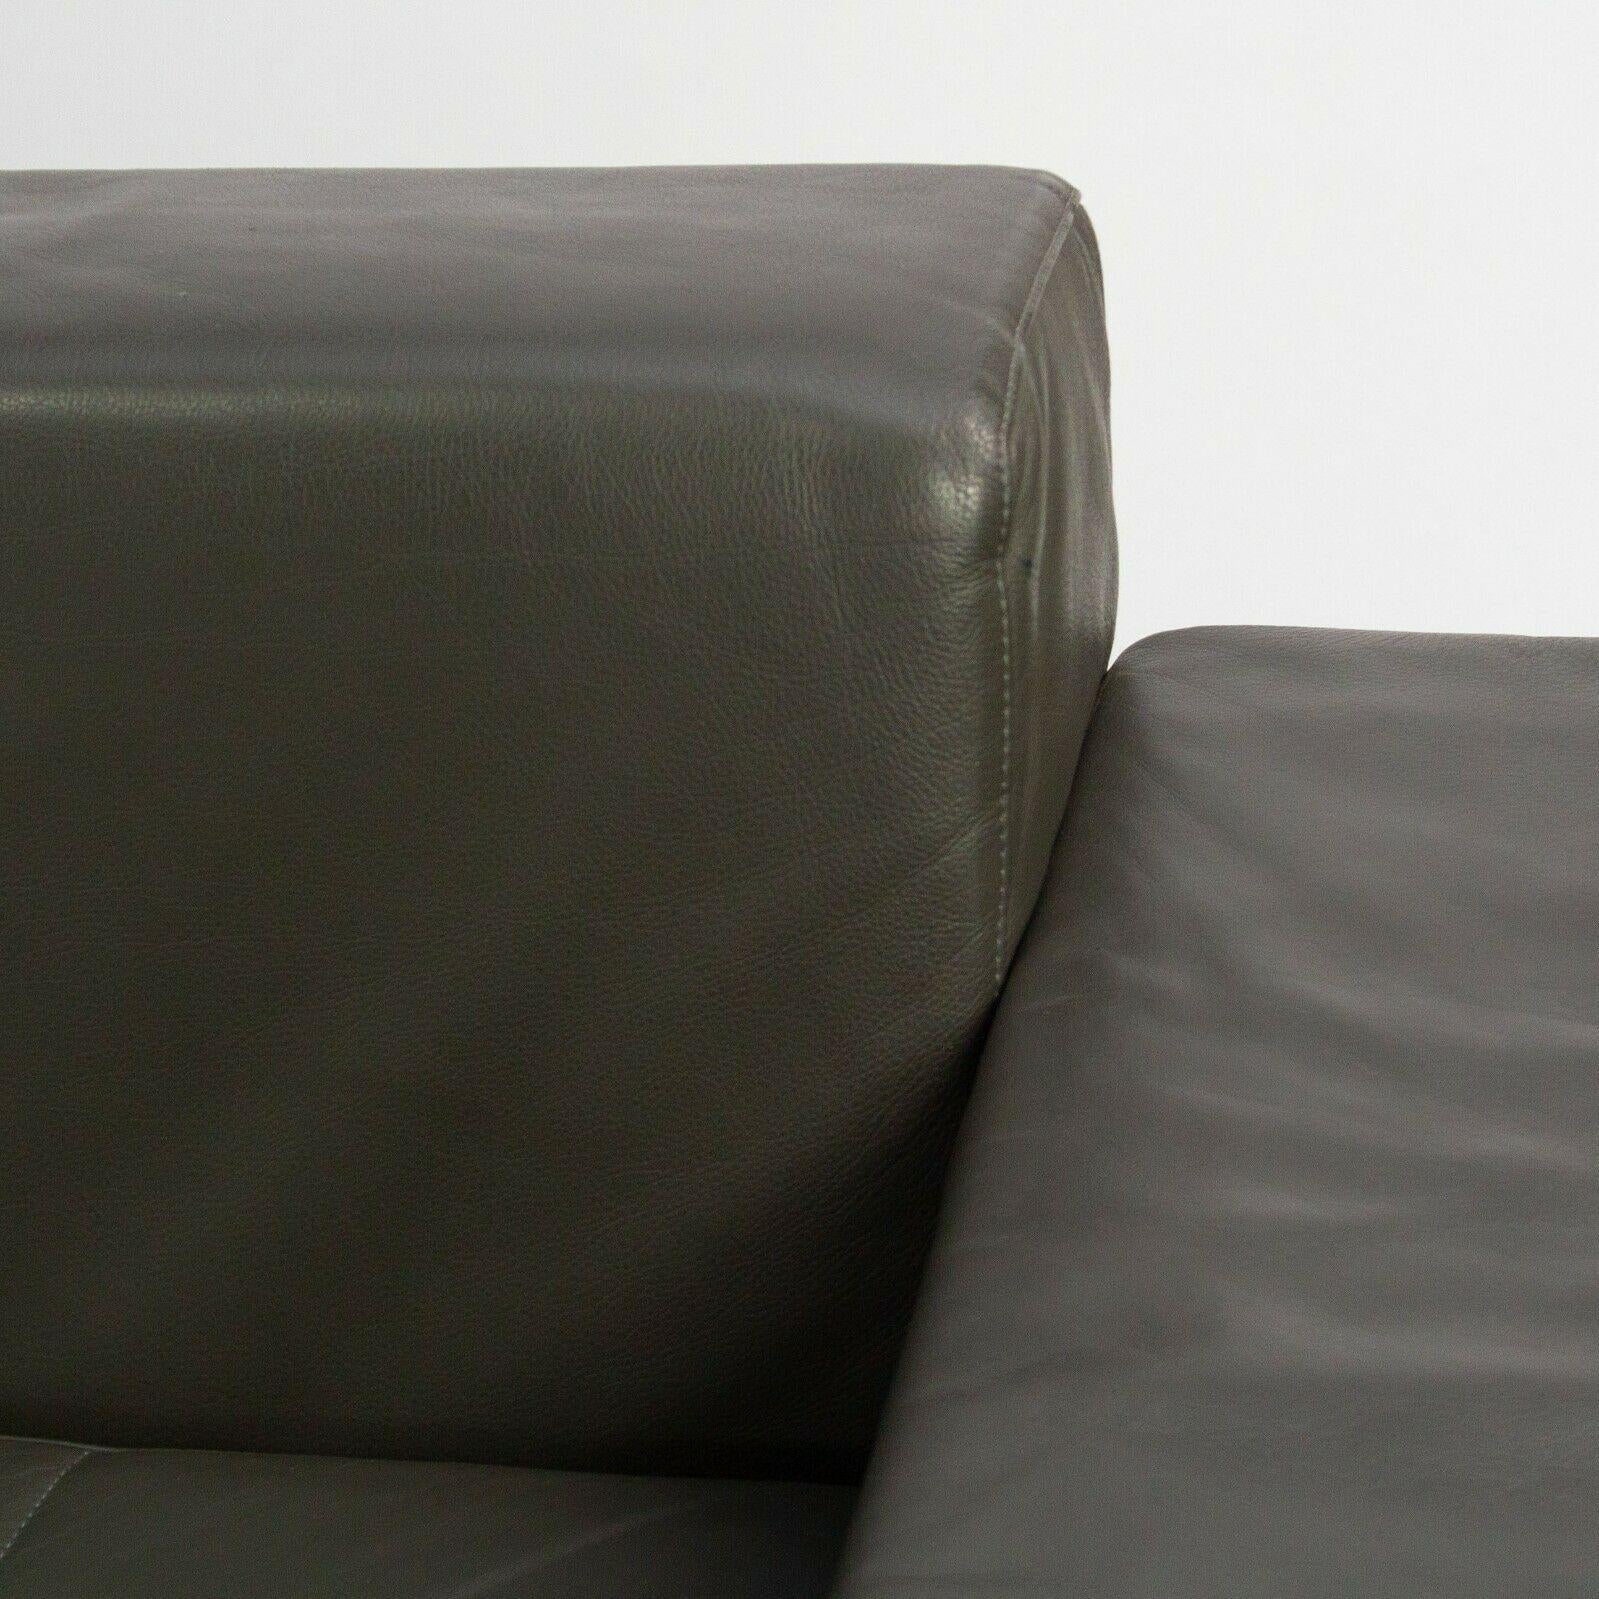 1999 Zanotta Alfa Grey Leather Sectional Modular Sofa by Emaf Progetti 2x Avail For Sale 1